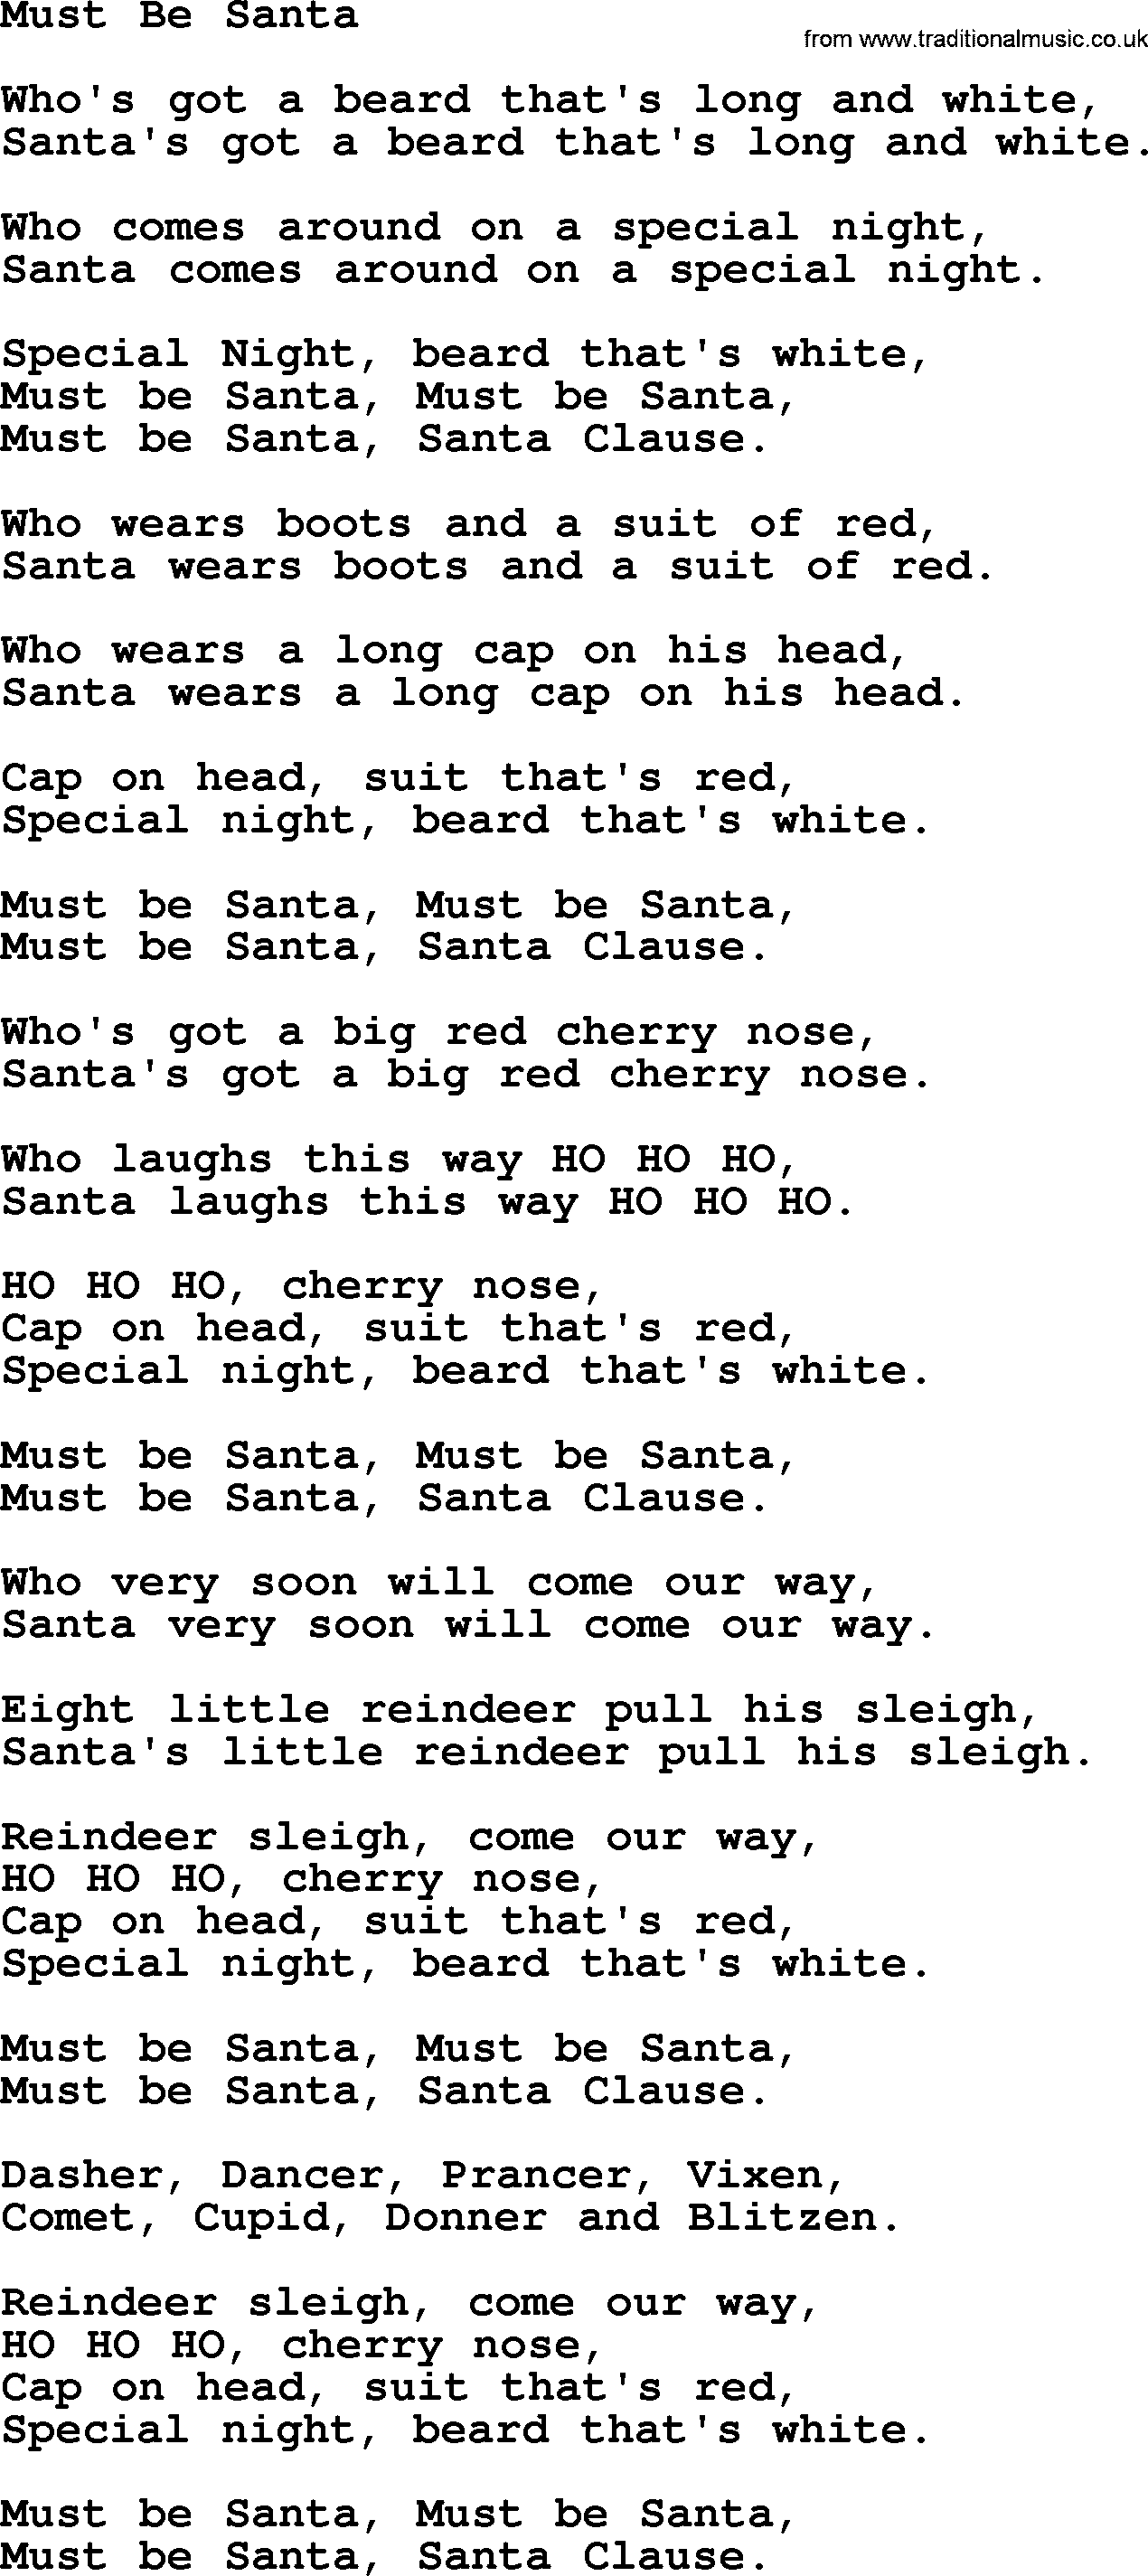 Catholic Hymn: Must Be Santa lyrics with PDF